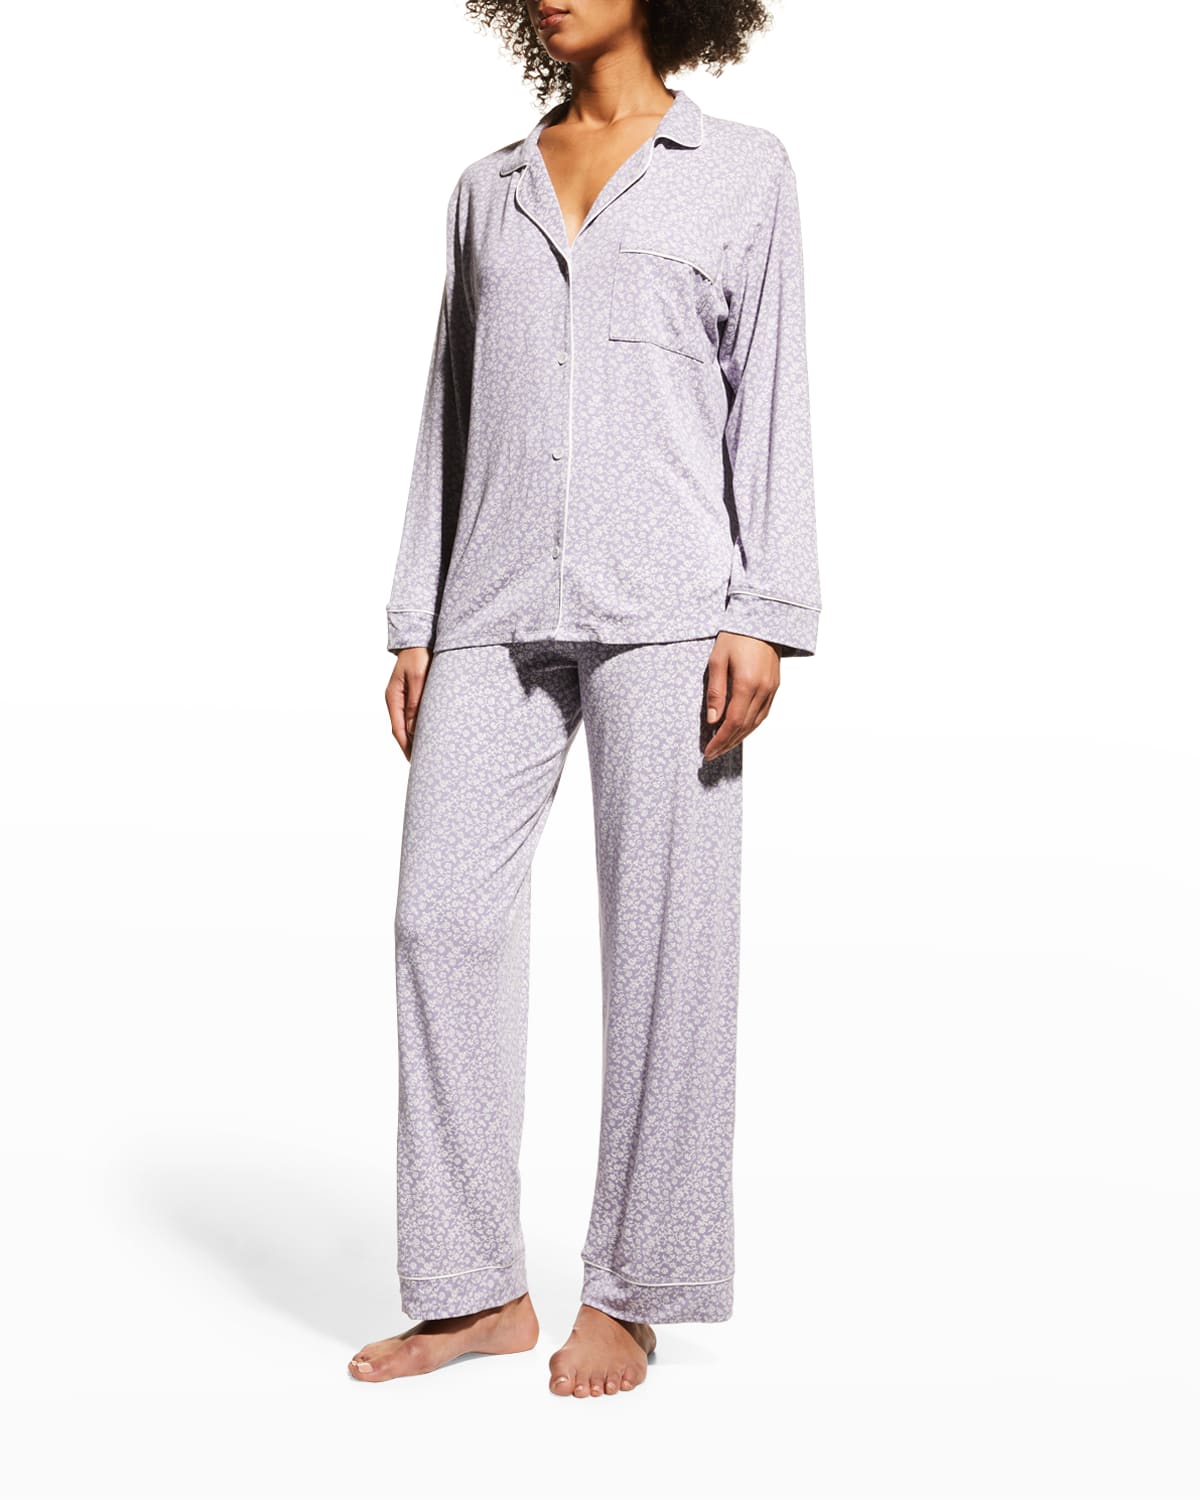 Eberjey Pajama Set | Neiman Marcus